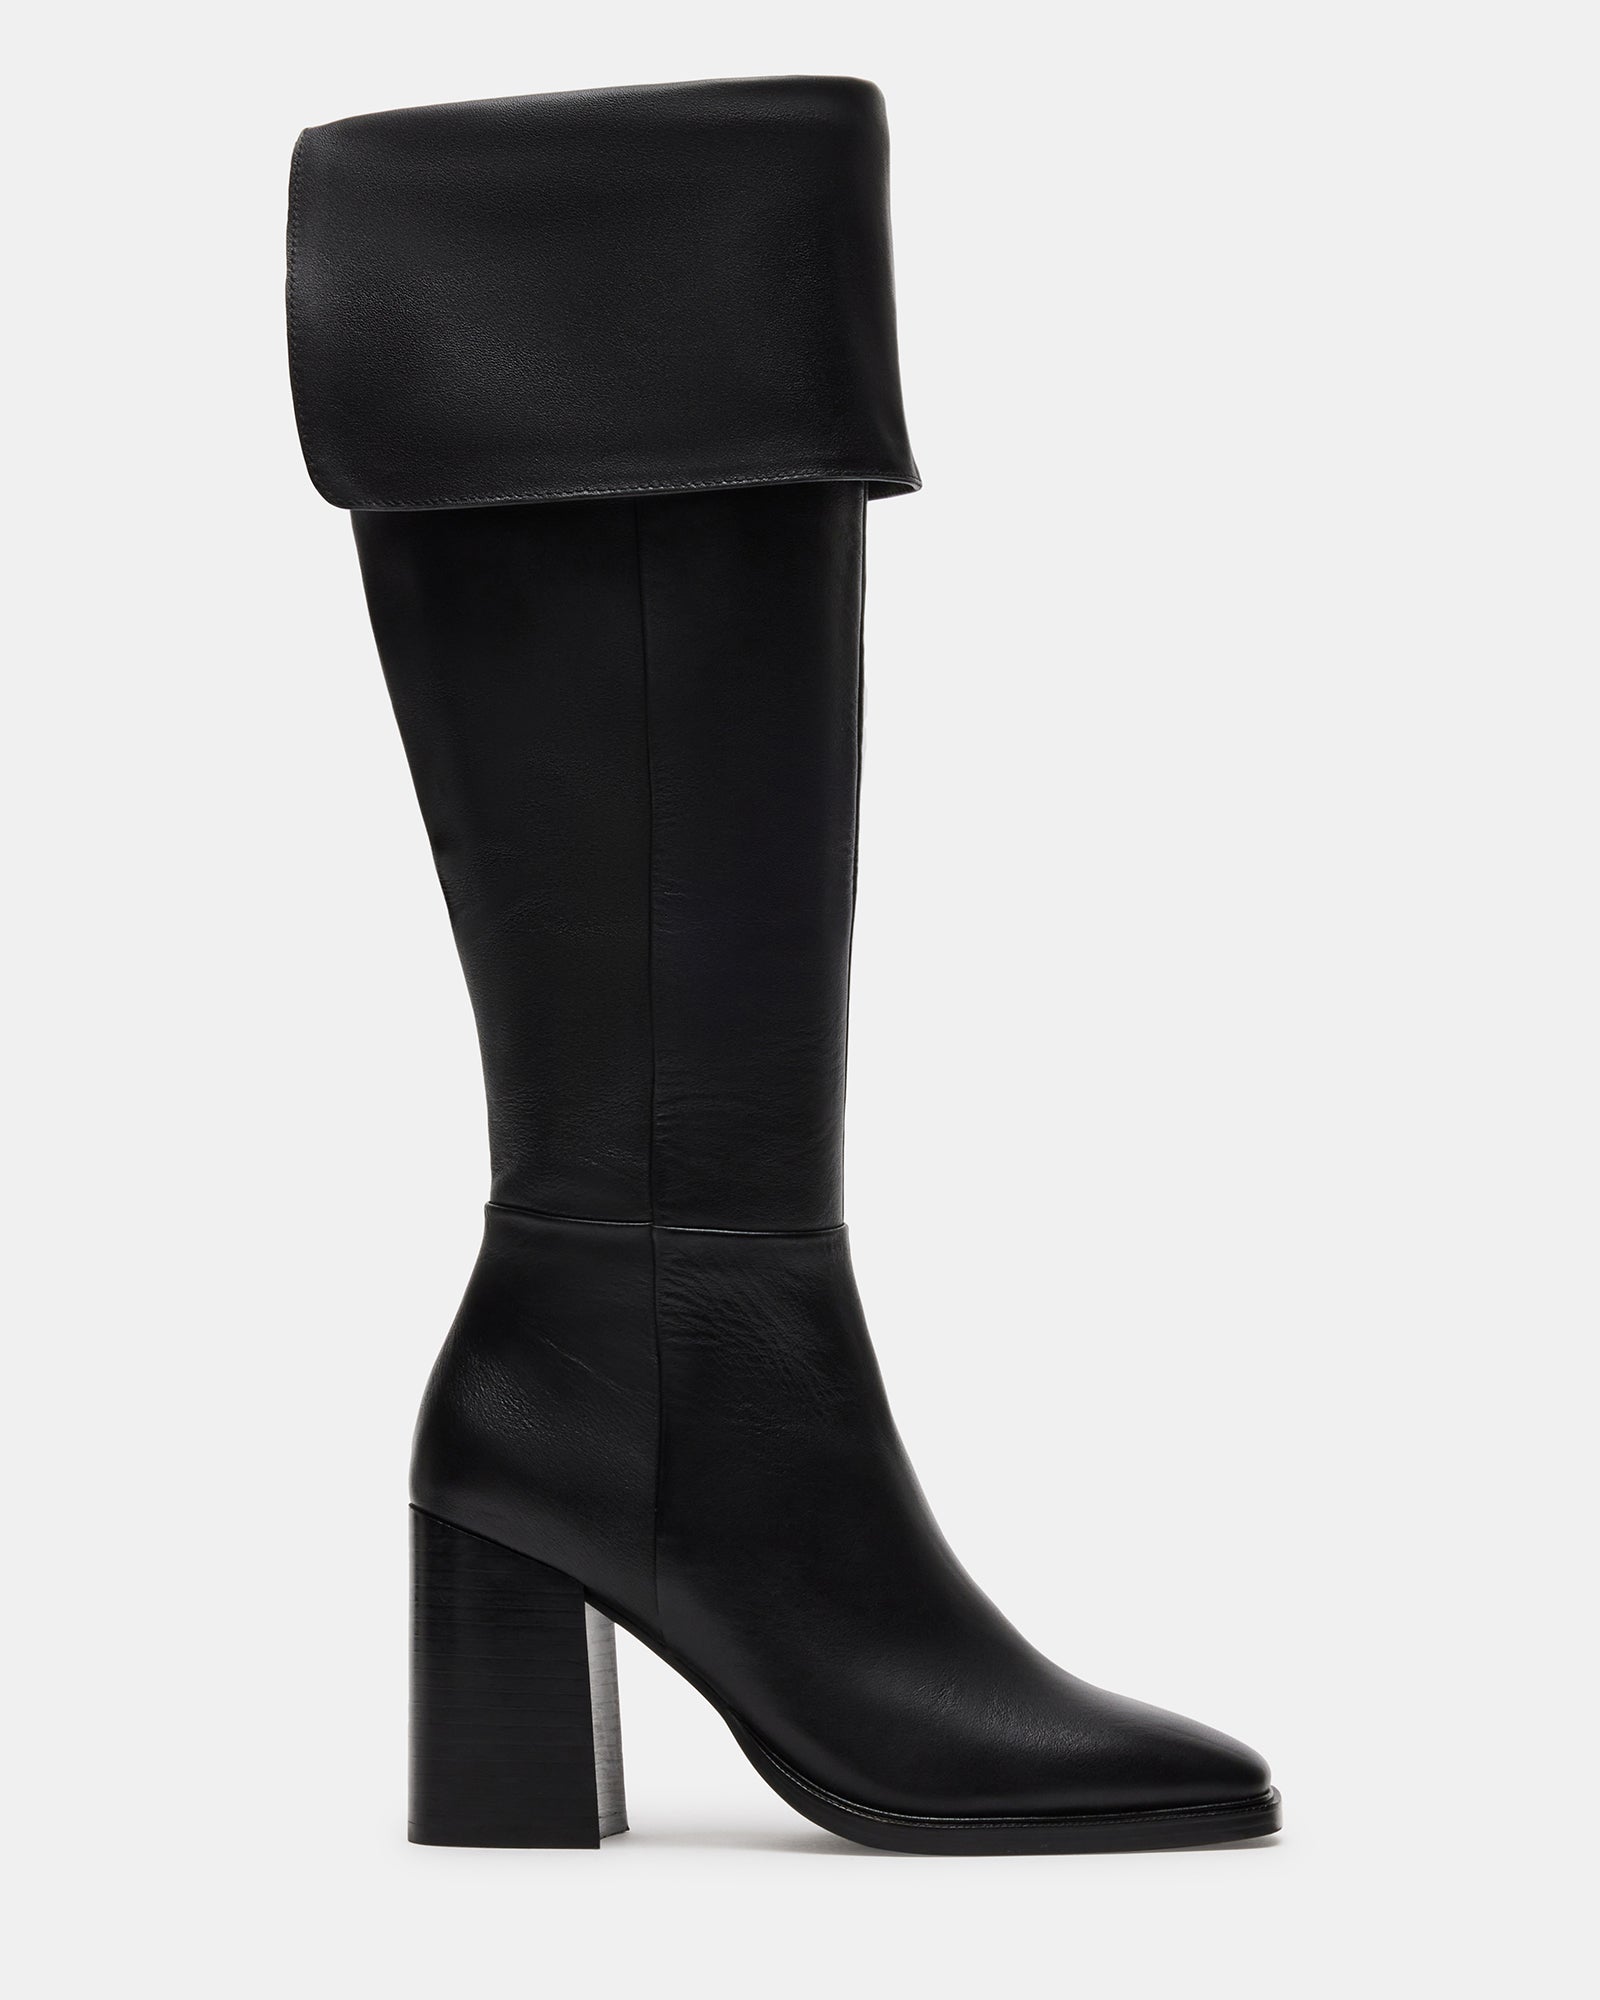 SIERRA Black Leather Block Heel Knee High Cuffed Boot | Women's Boots ...